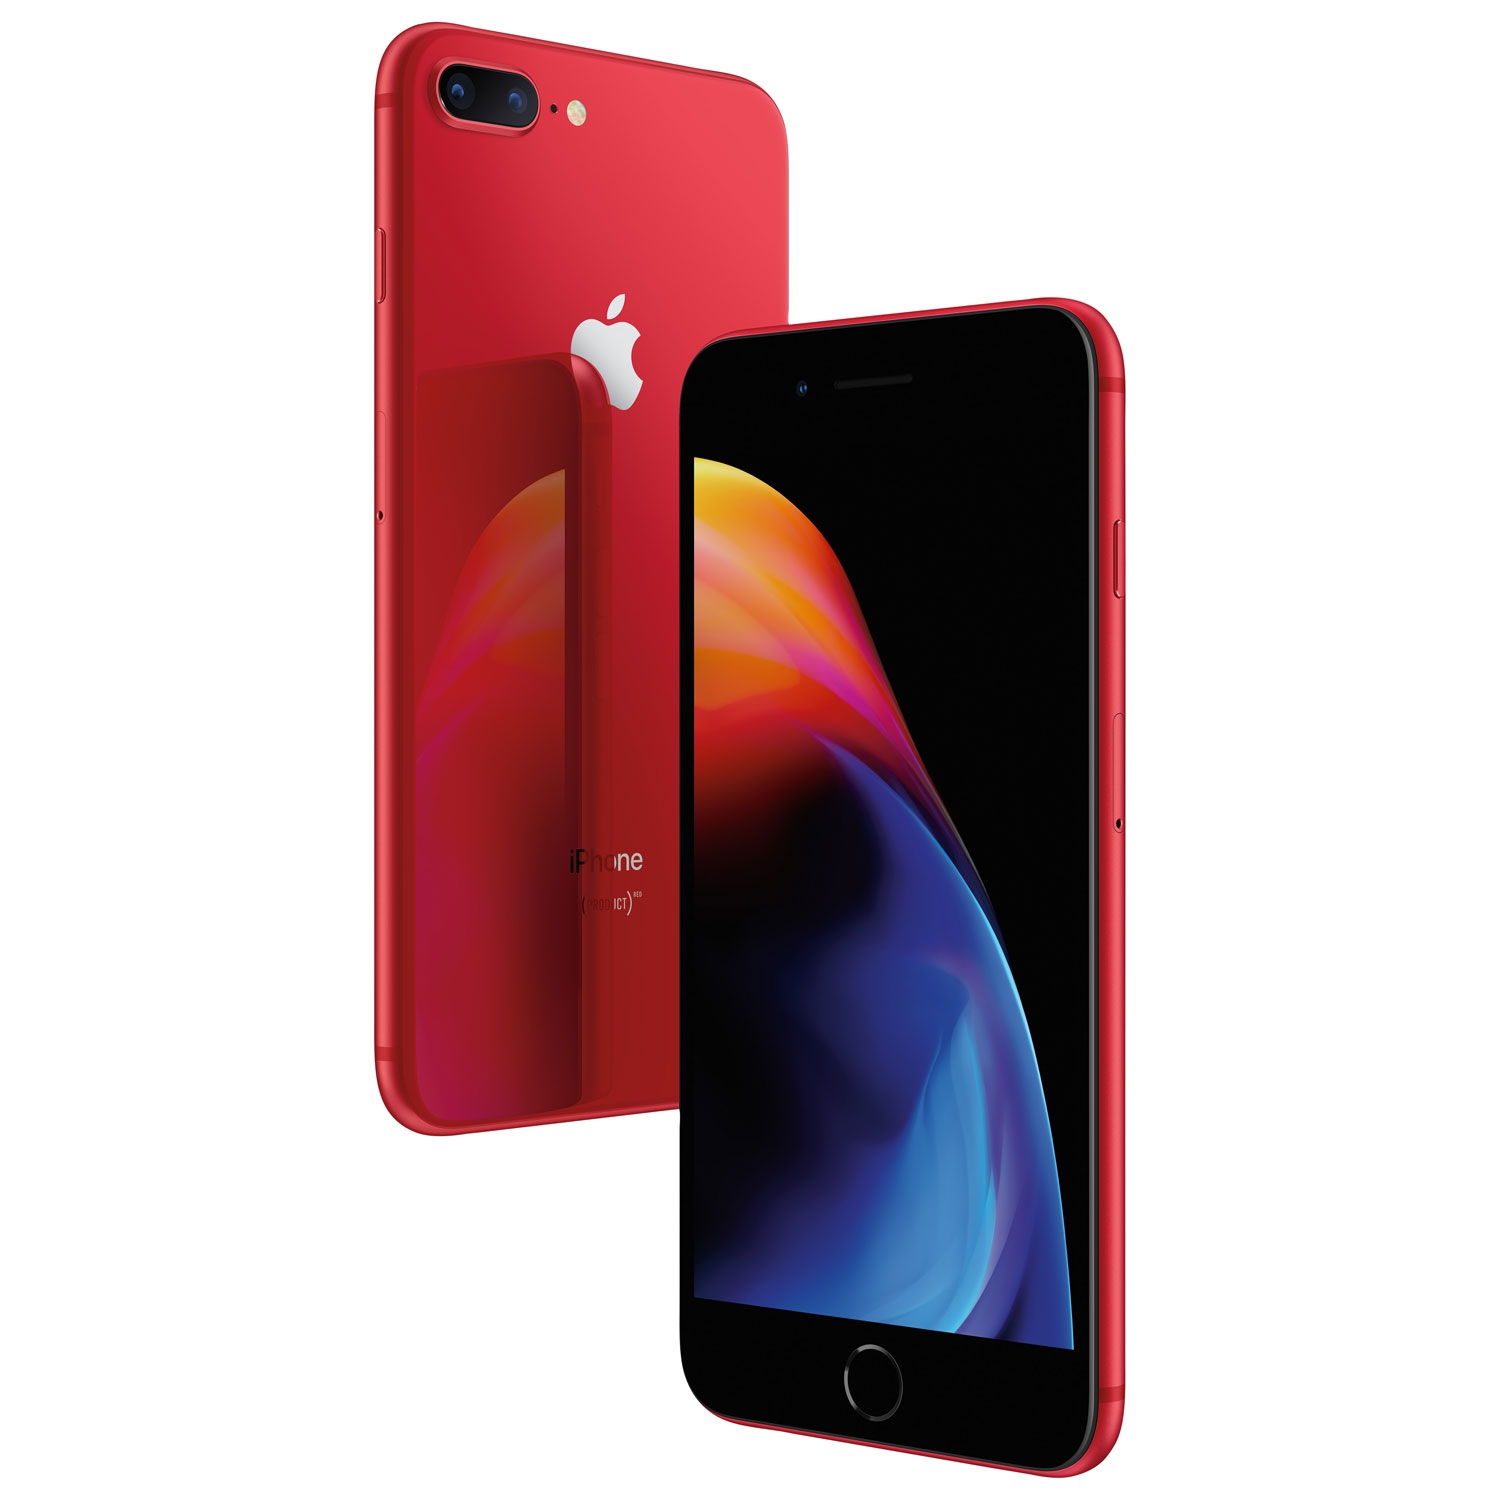 Refurbished (Good) - Apple iPhone 8 Plus 256GB Smartphone - (Product)RED - Unlocked